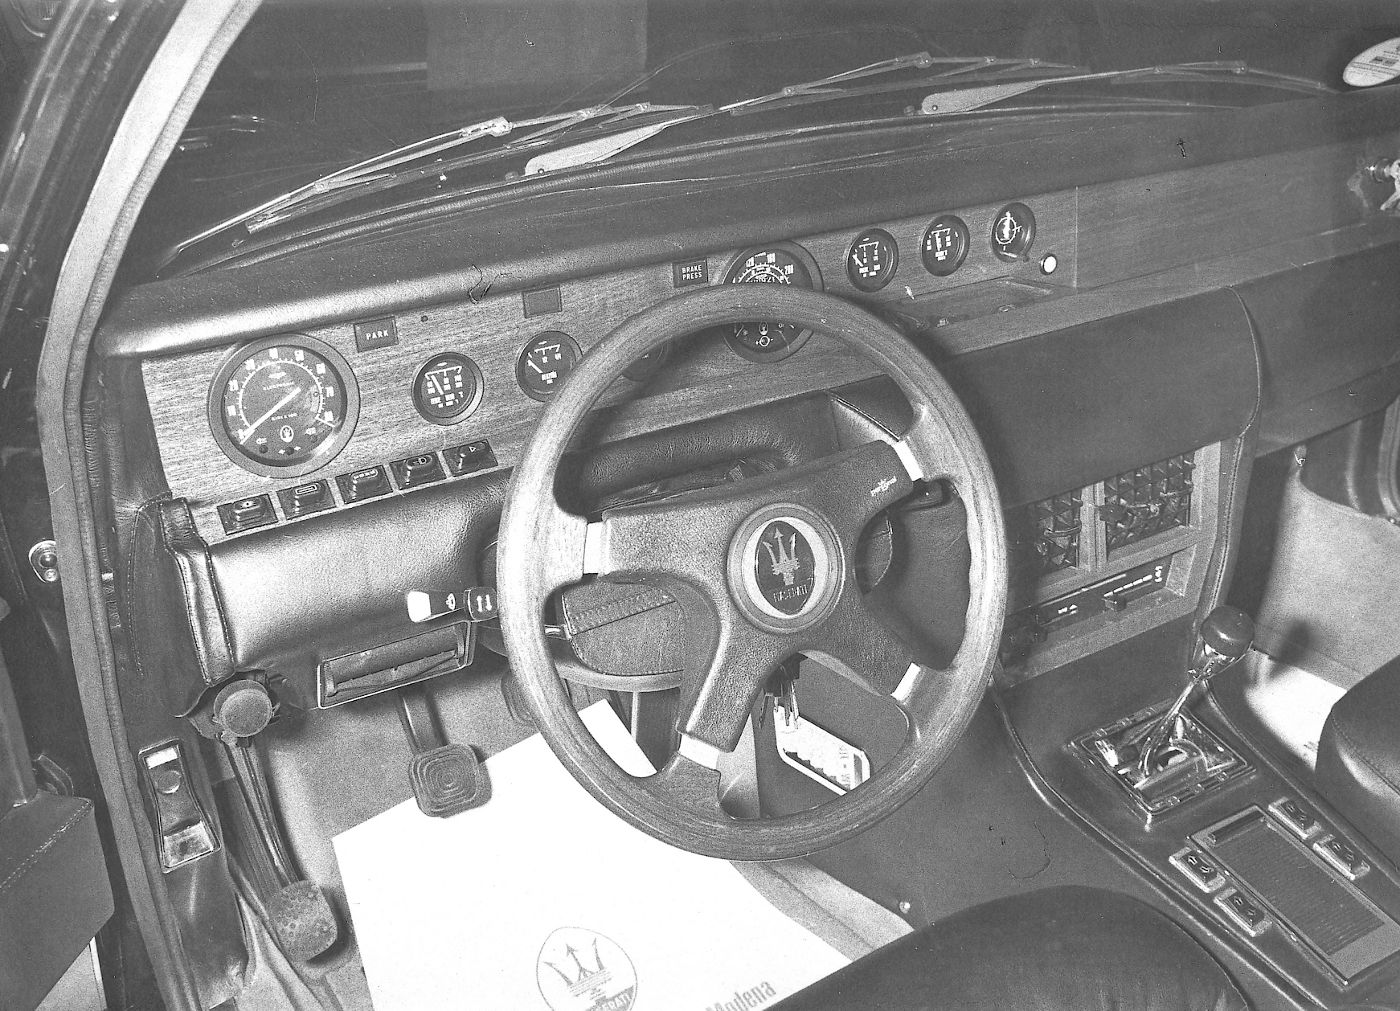 1974 Maserati Quattroporte II - interior view of the classic sedan